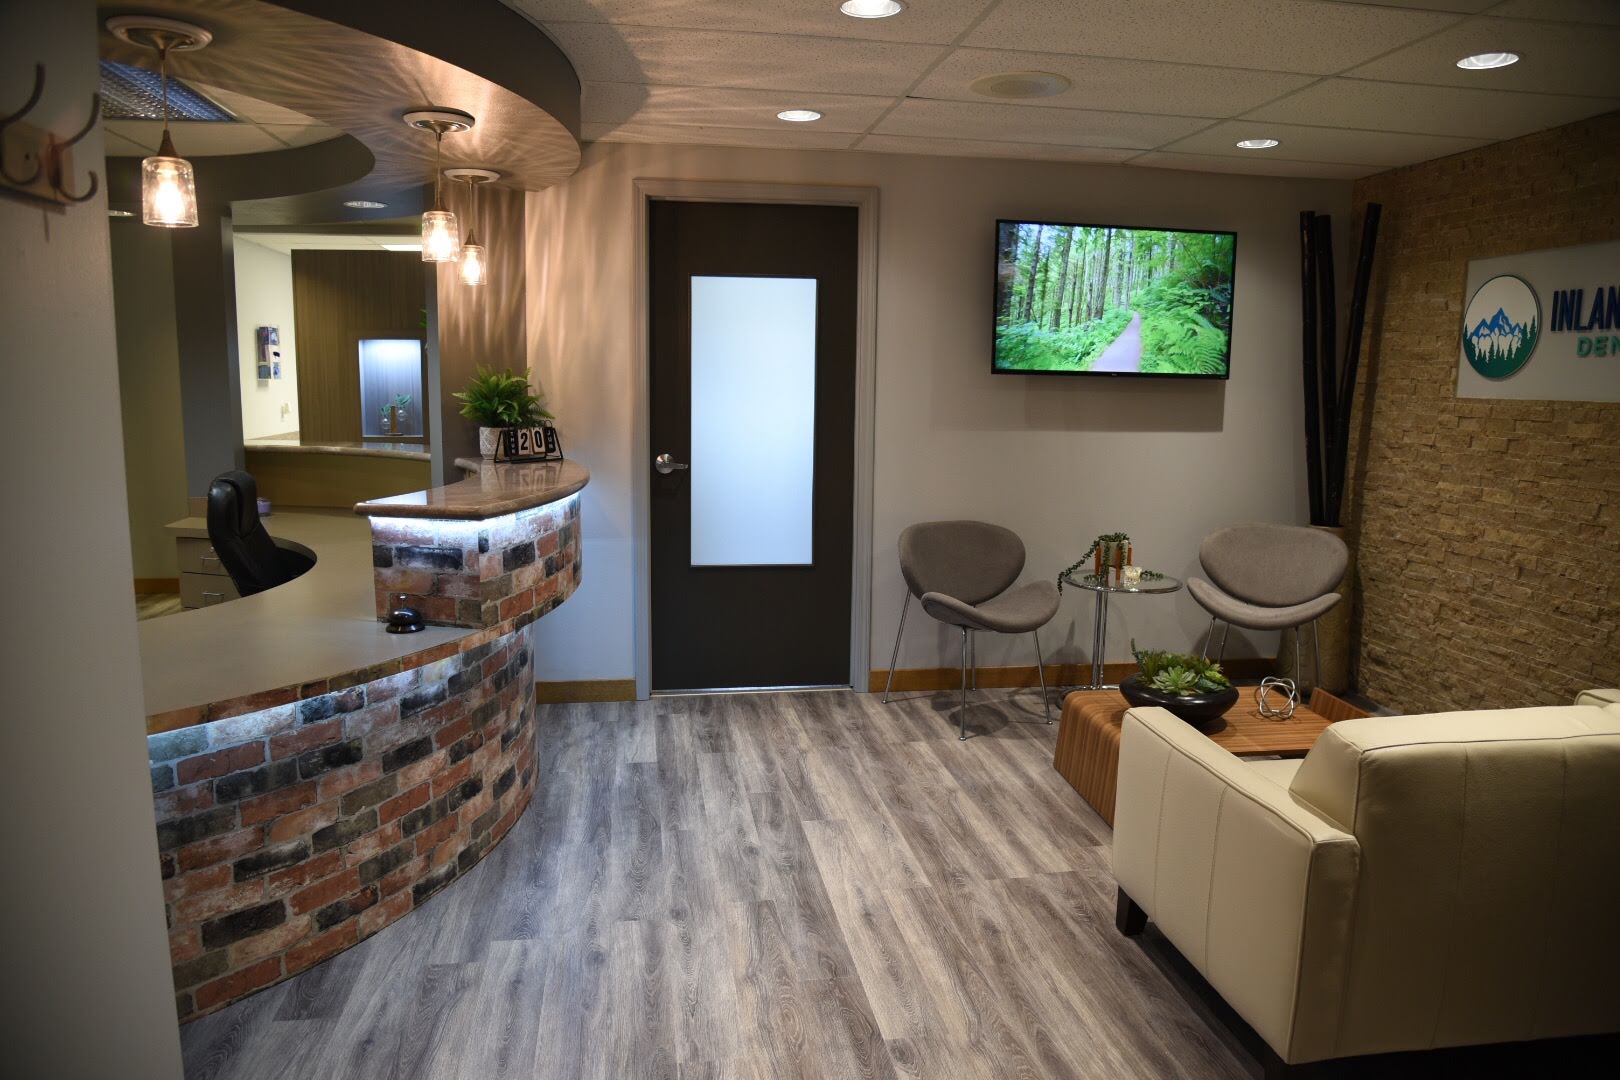 Inland Northwest Dental Group Waiting Room Dentist Spokane WA